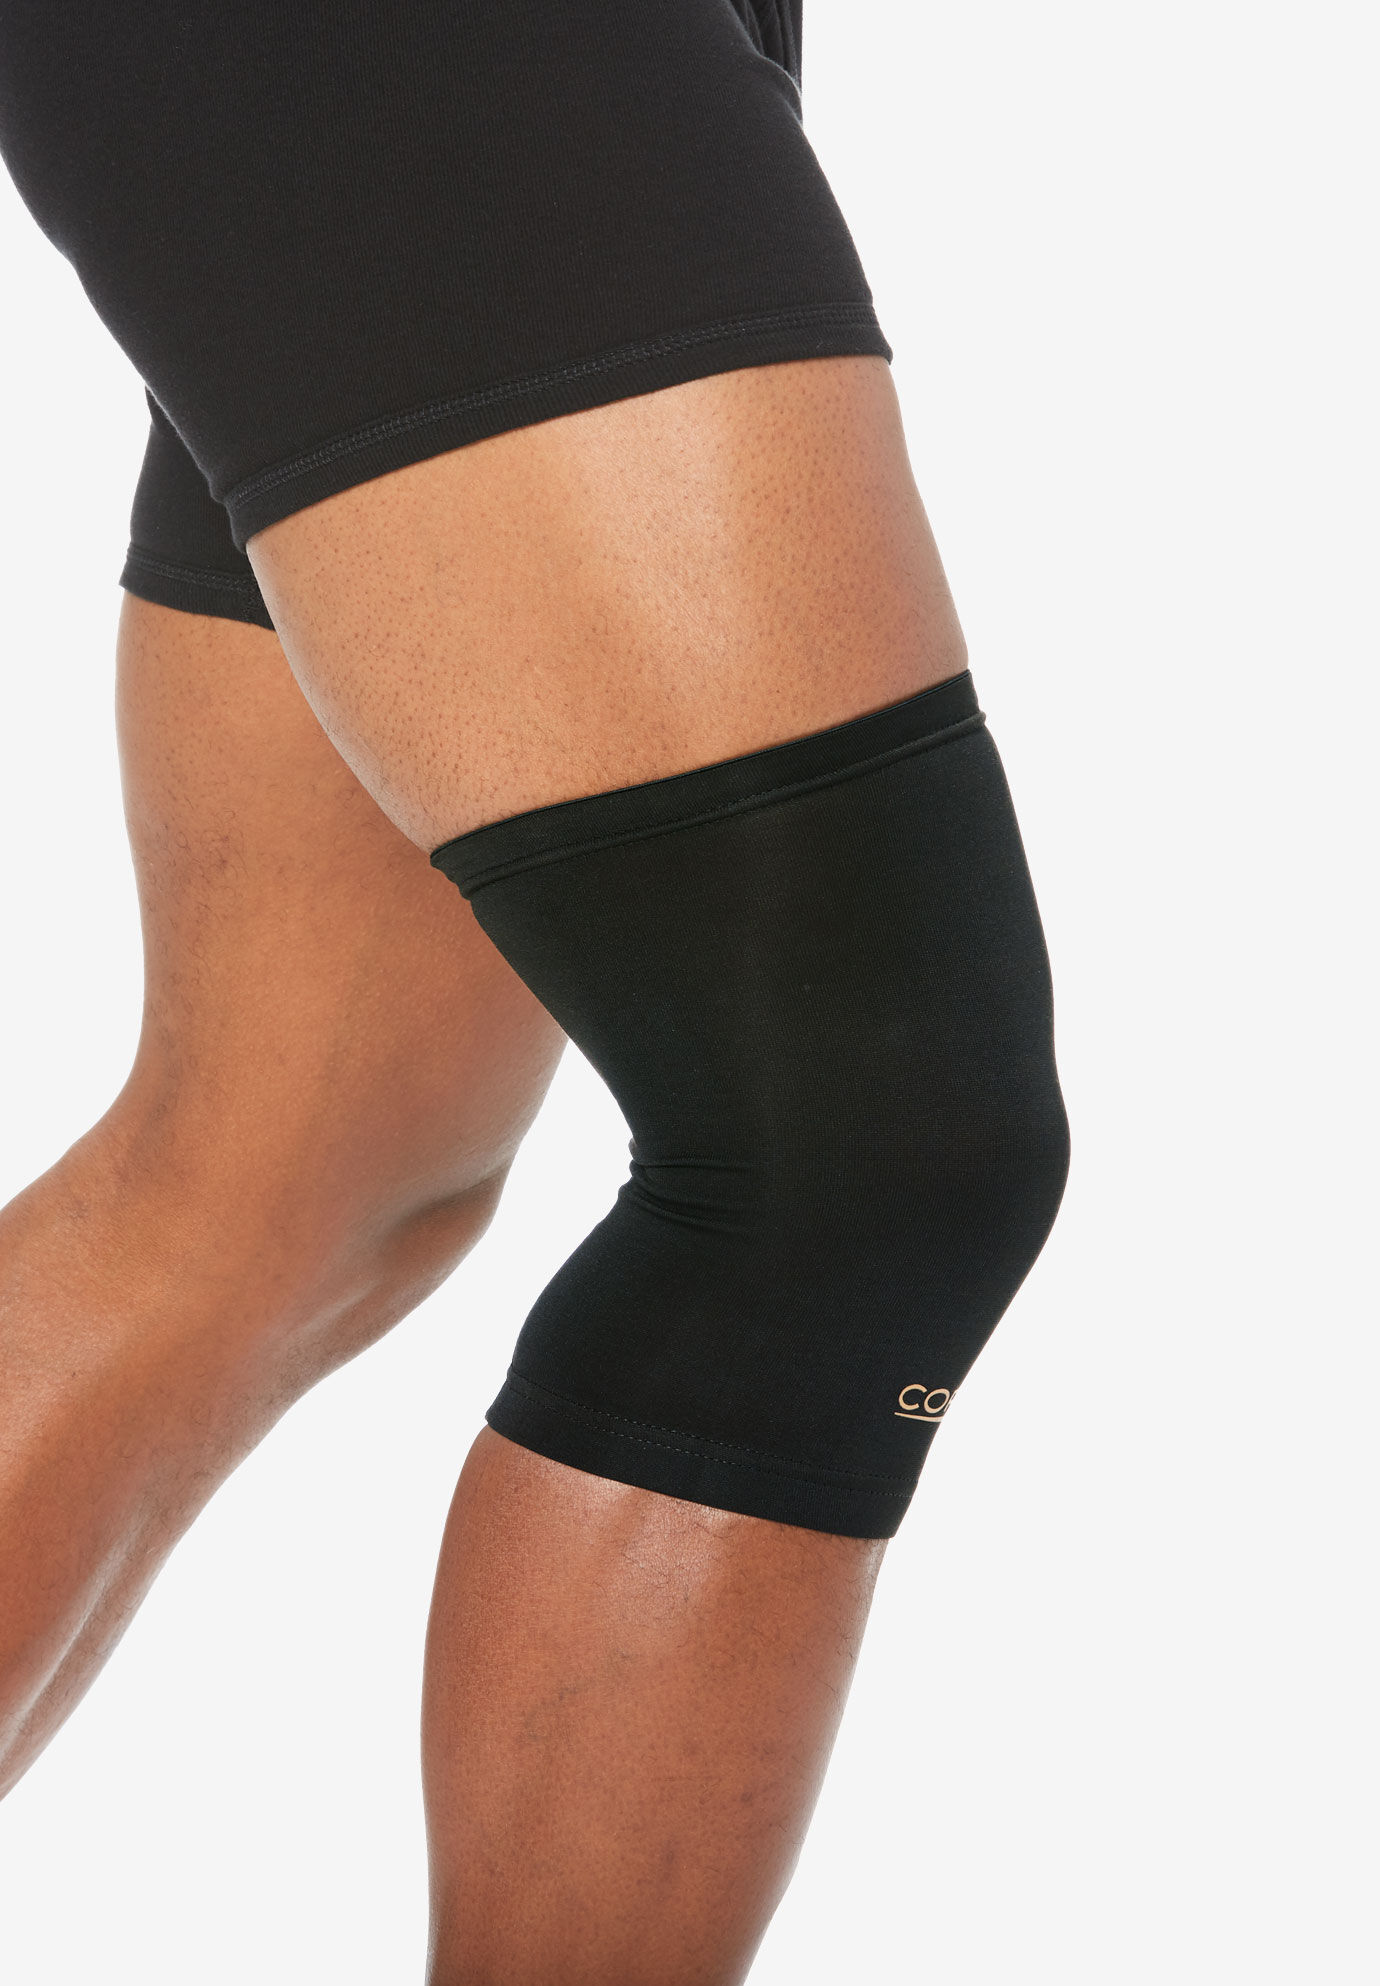 Tommie Copper - Men's XL Compression Knee Sleeve - Shop Jadas